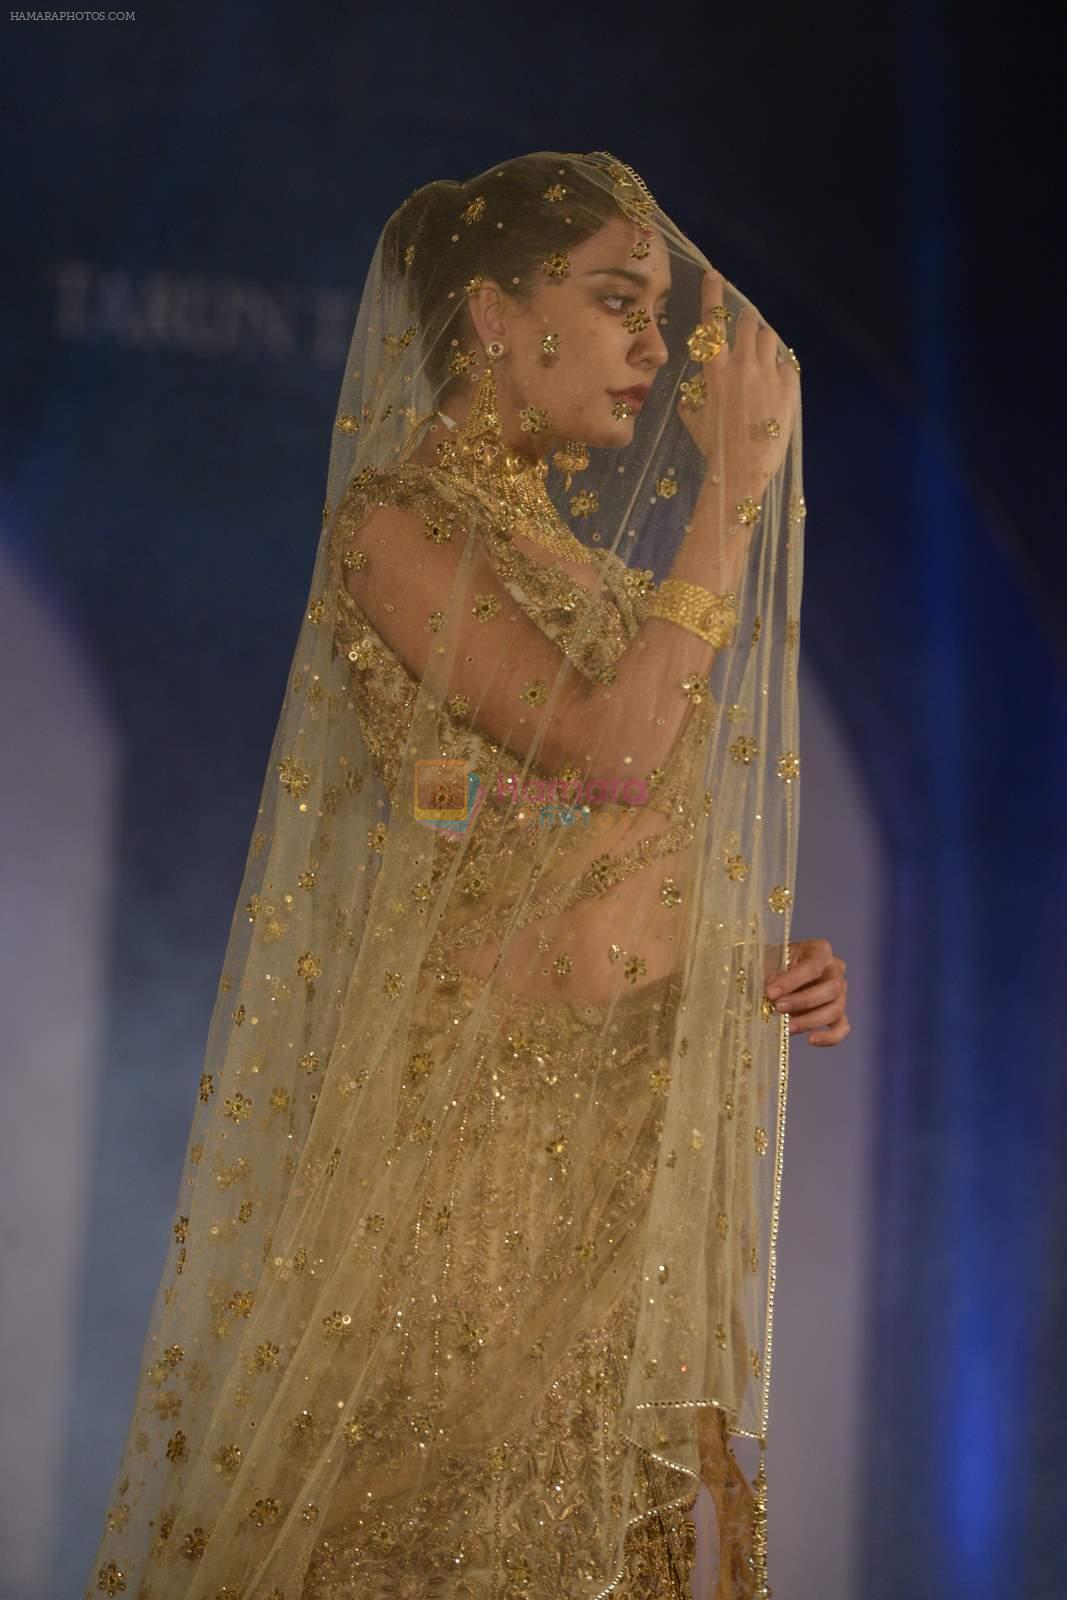 Lisa Haydon walks for Tarun Tahiliani-Azva show in Hyderabad in Tak Krishna on 13th Jan 2015